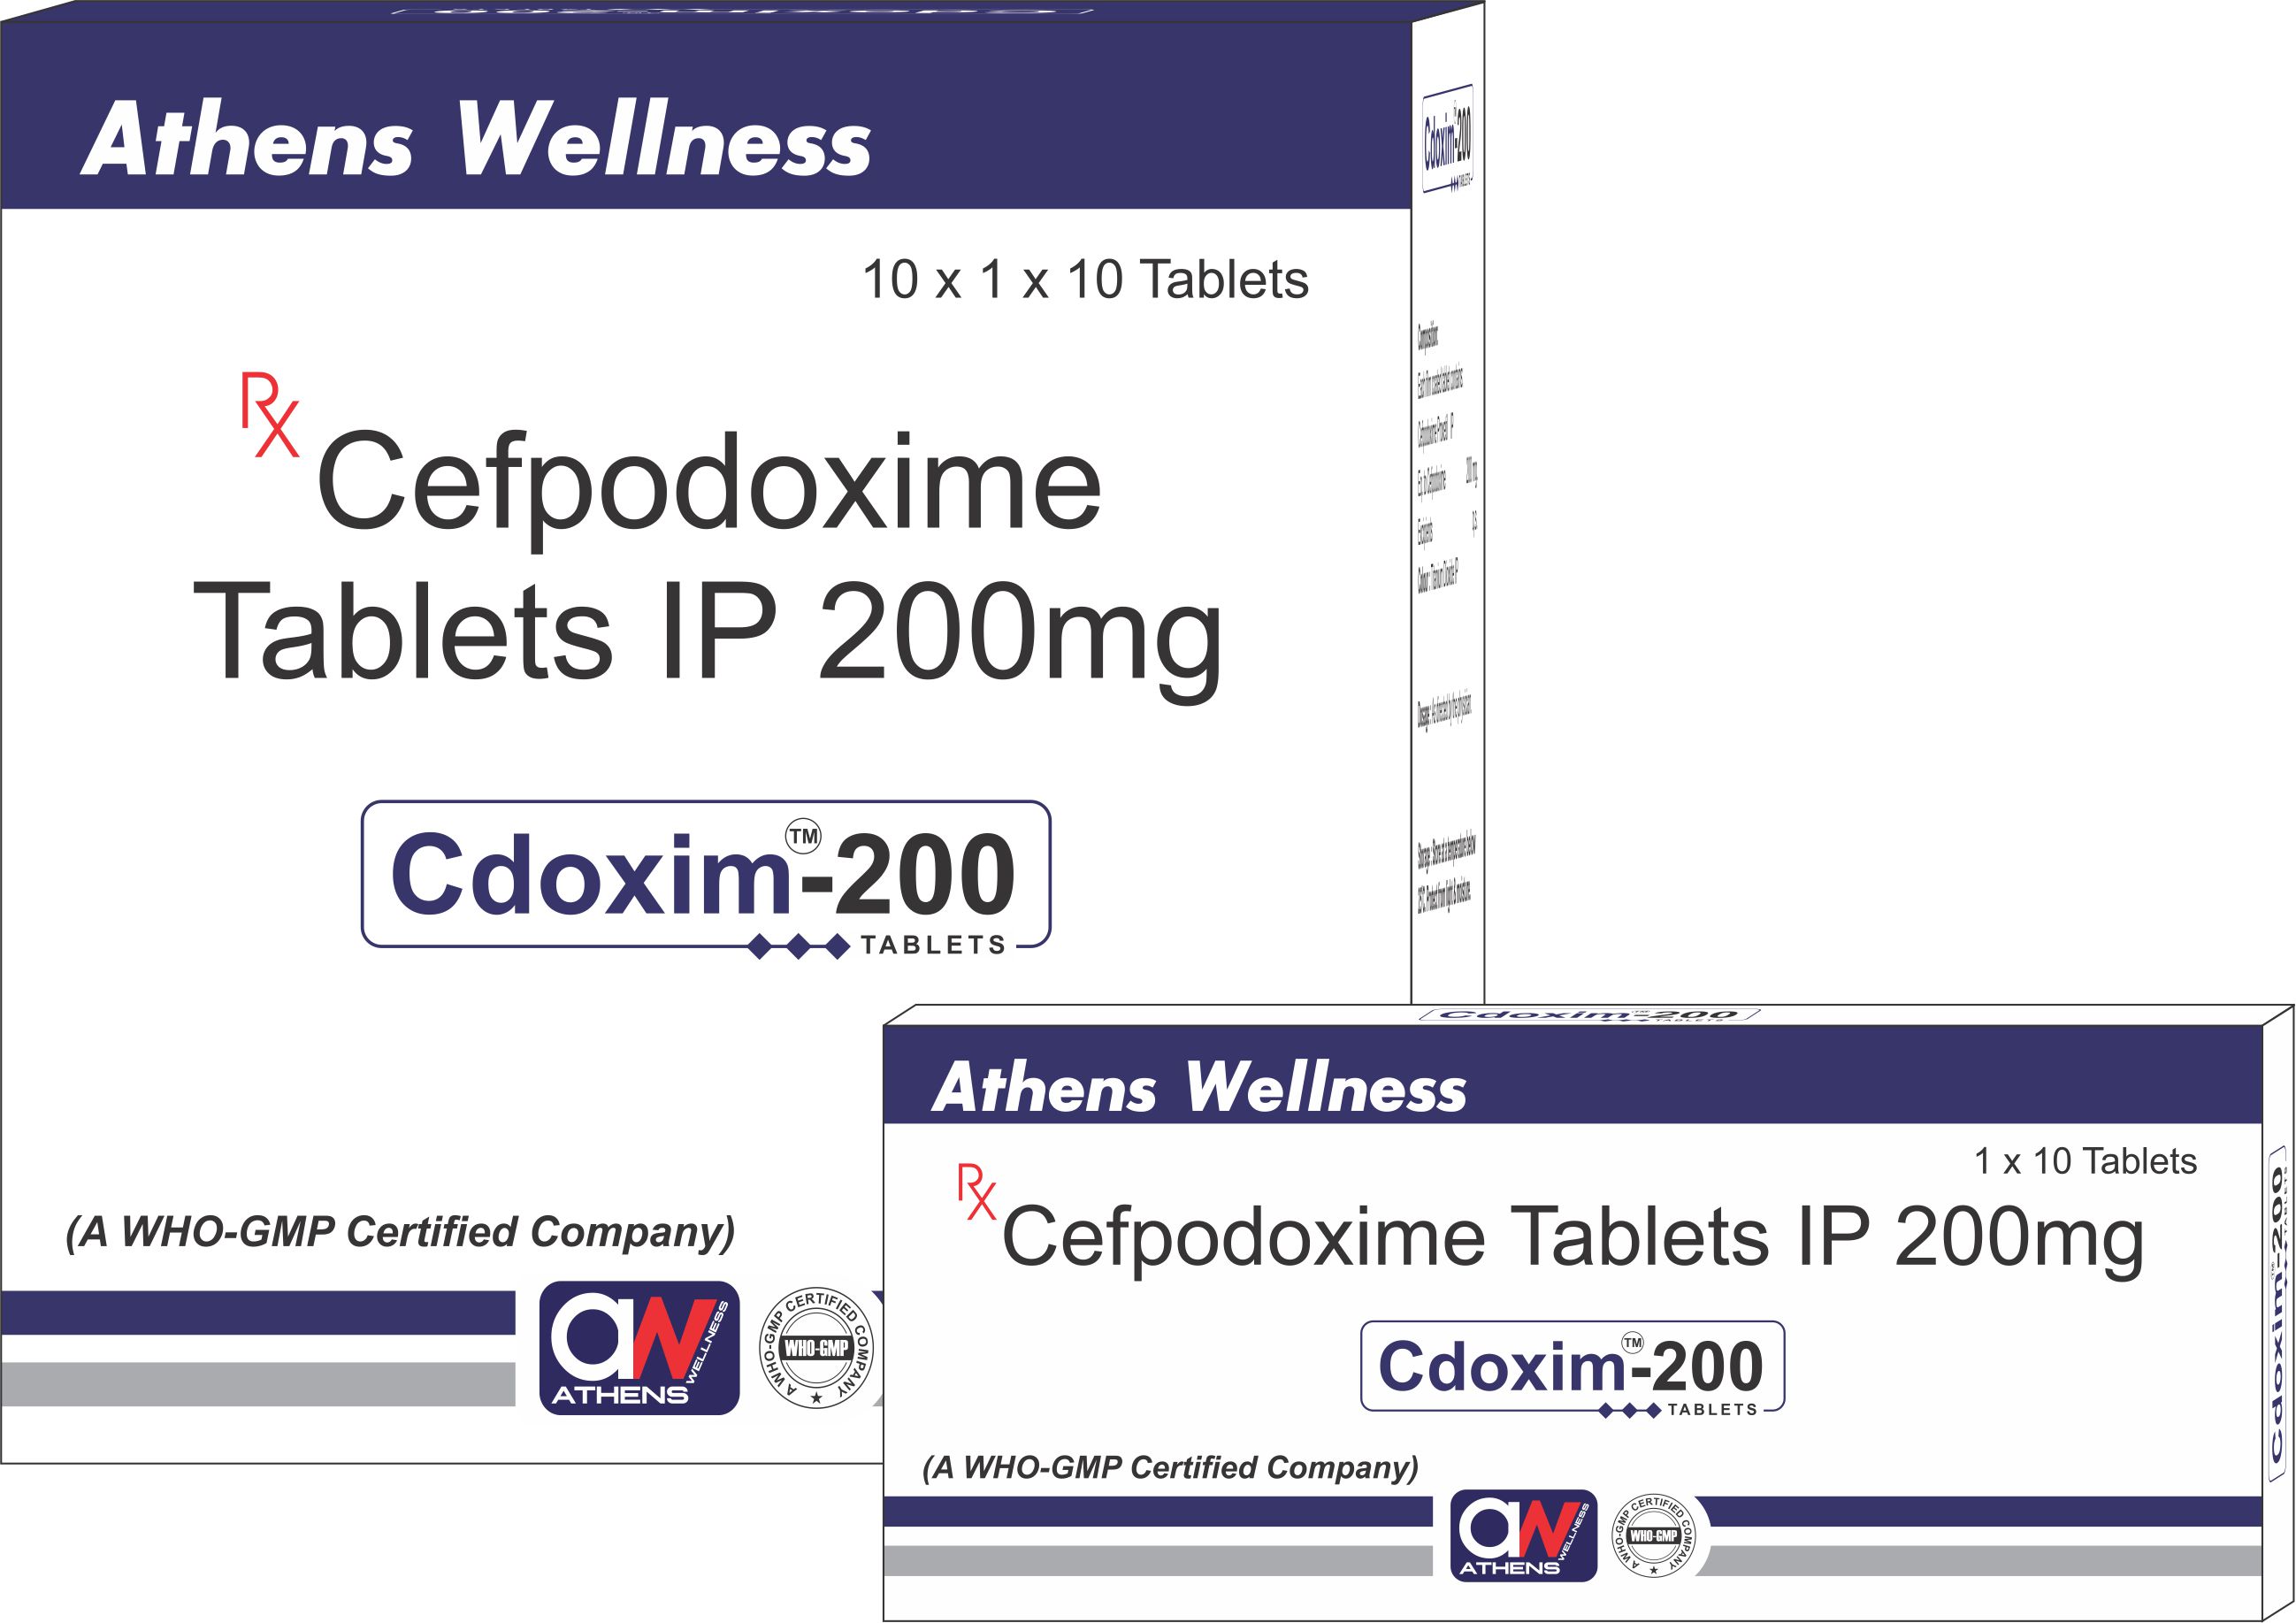 CDOXIM-200 DT TABLETS